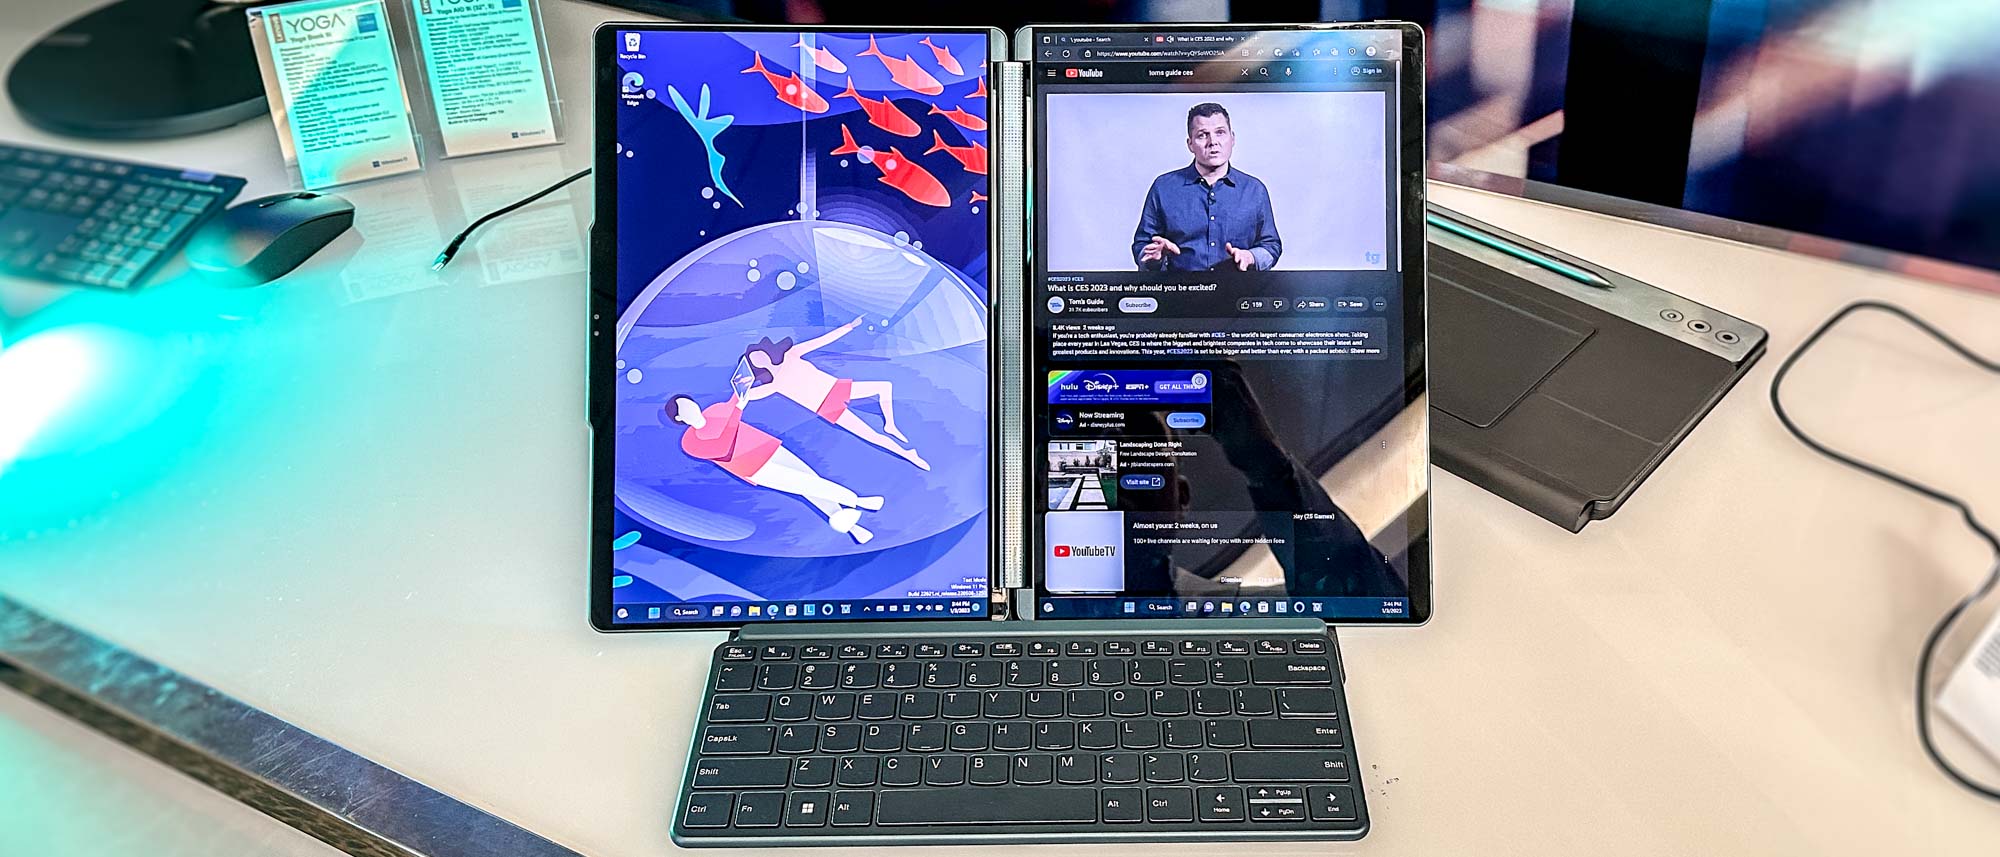 Lenovo Yoga Book 9i hands on: A dual-screen multitasking beast | Tom's Guide